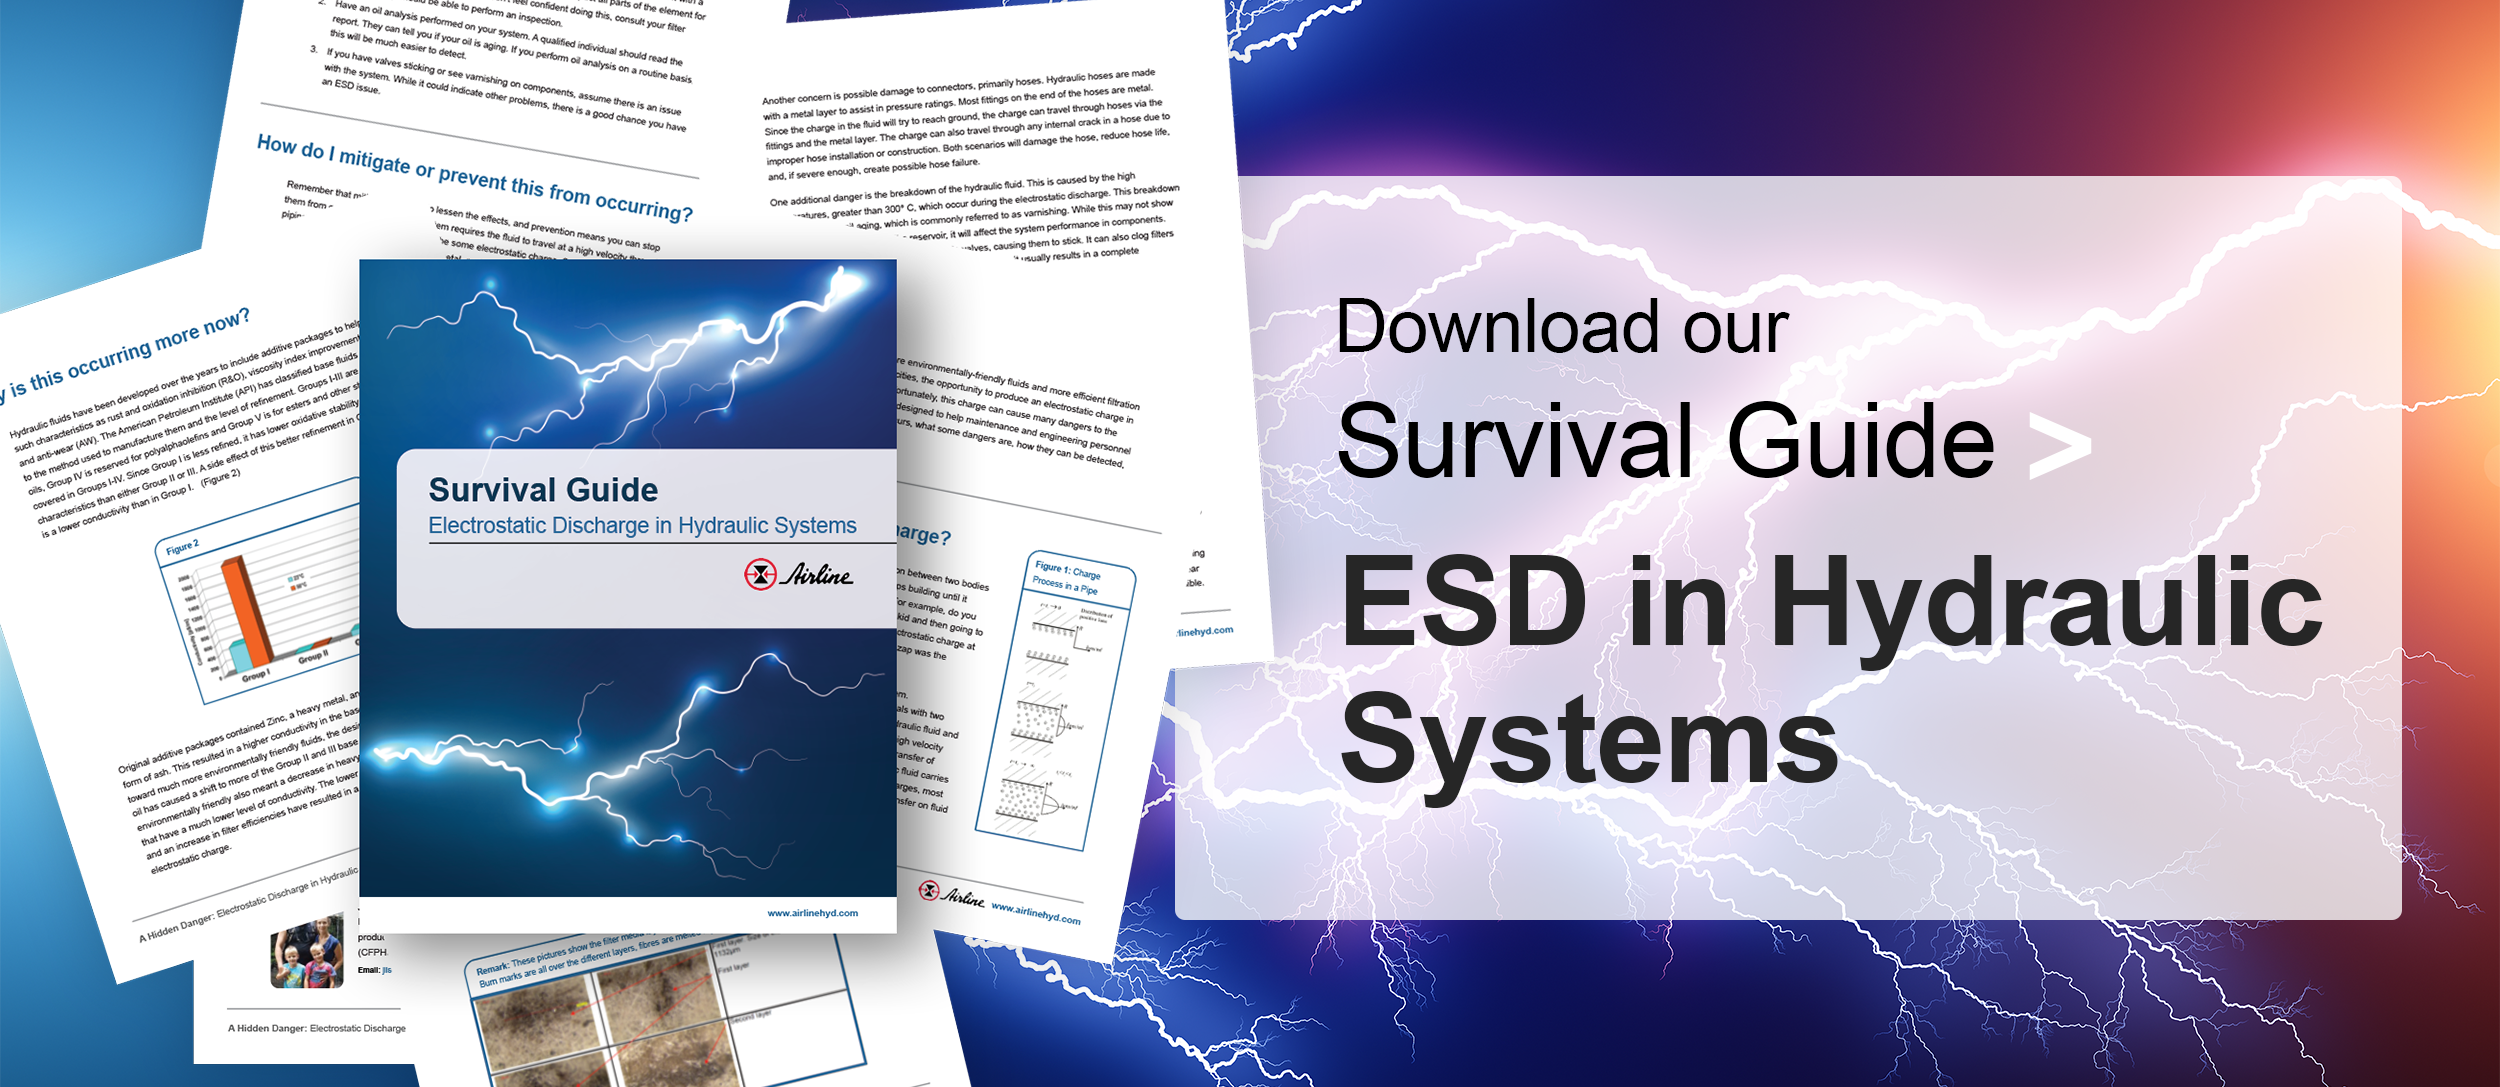 survival guide download banner copy